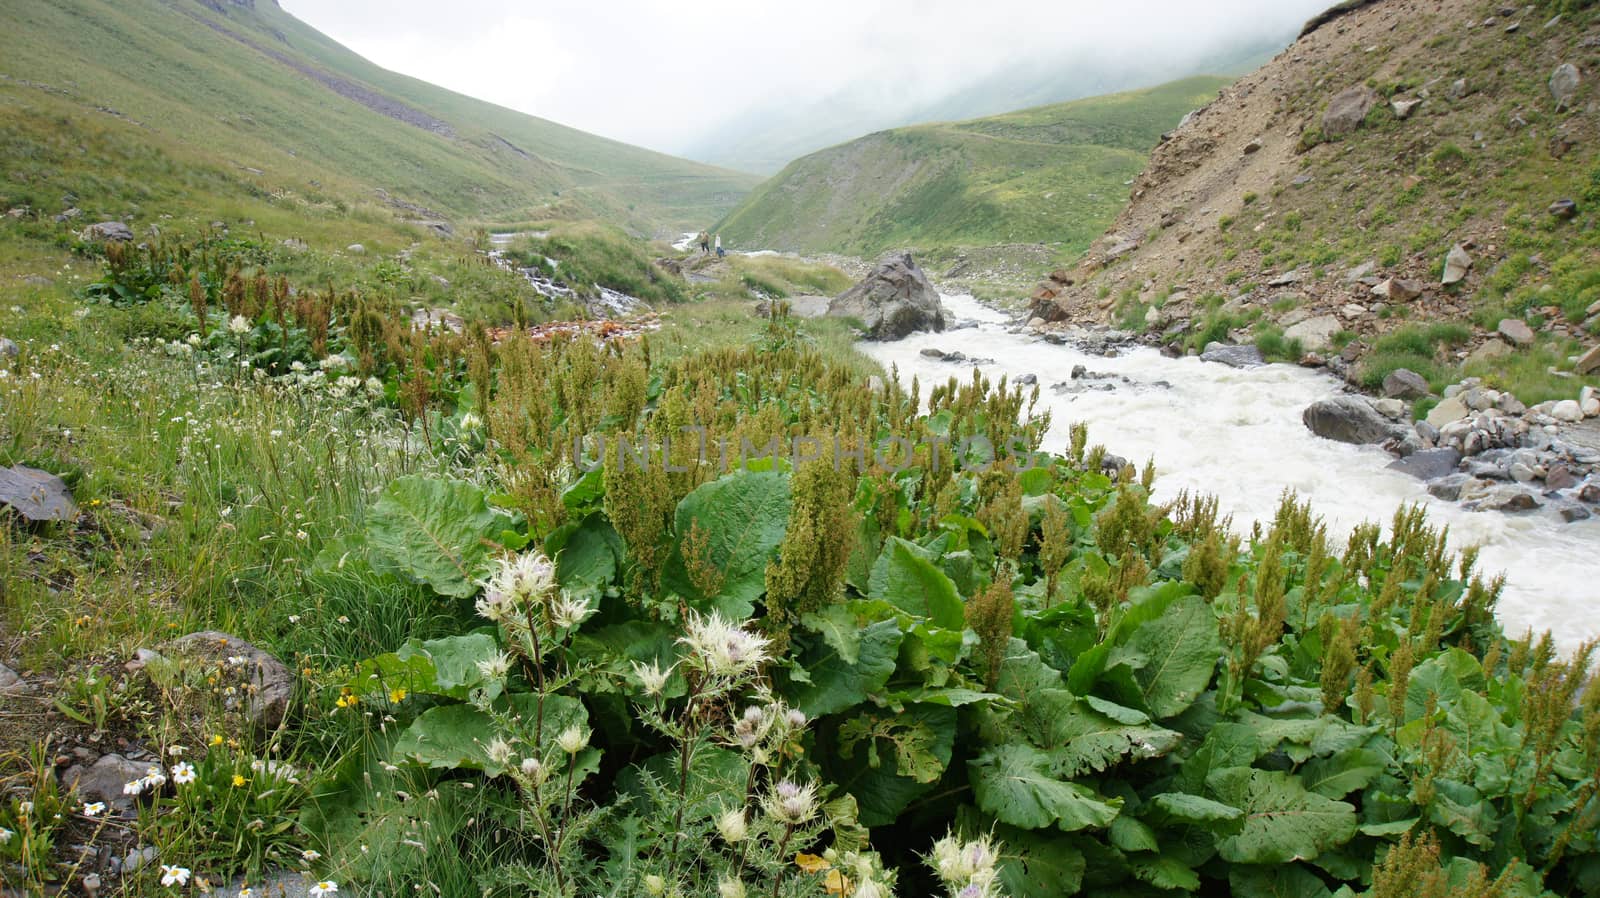 River at Greater Caucasus Mountain Range, North Osetia region, Russia